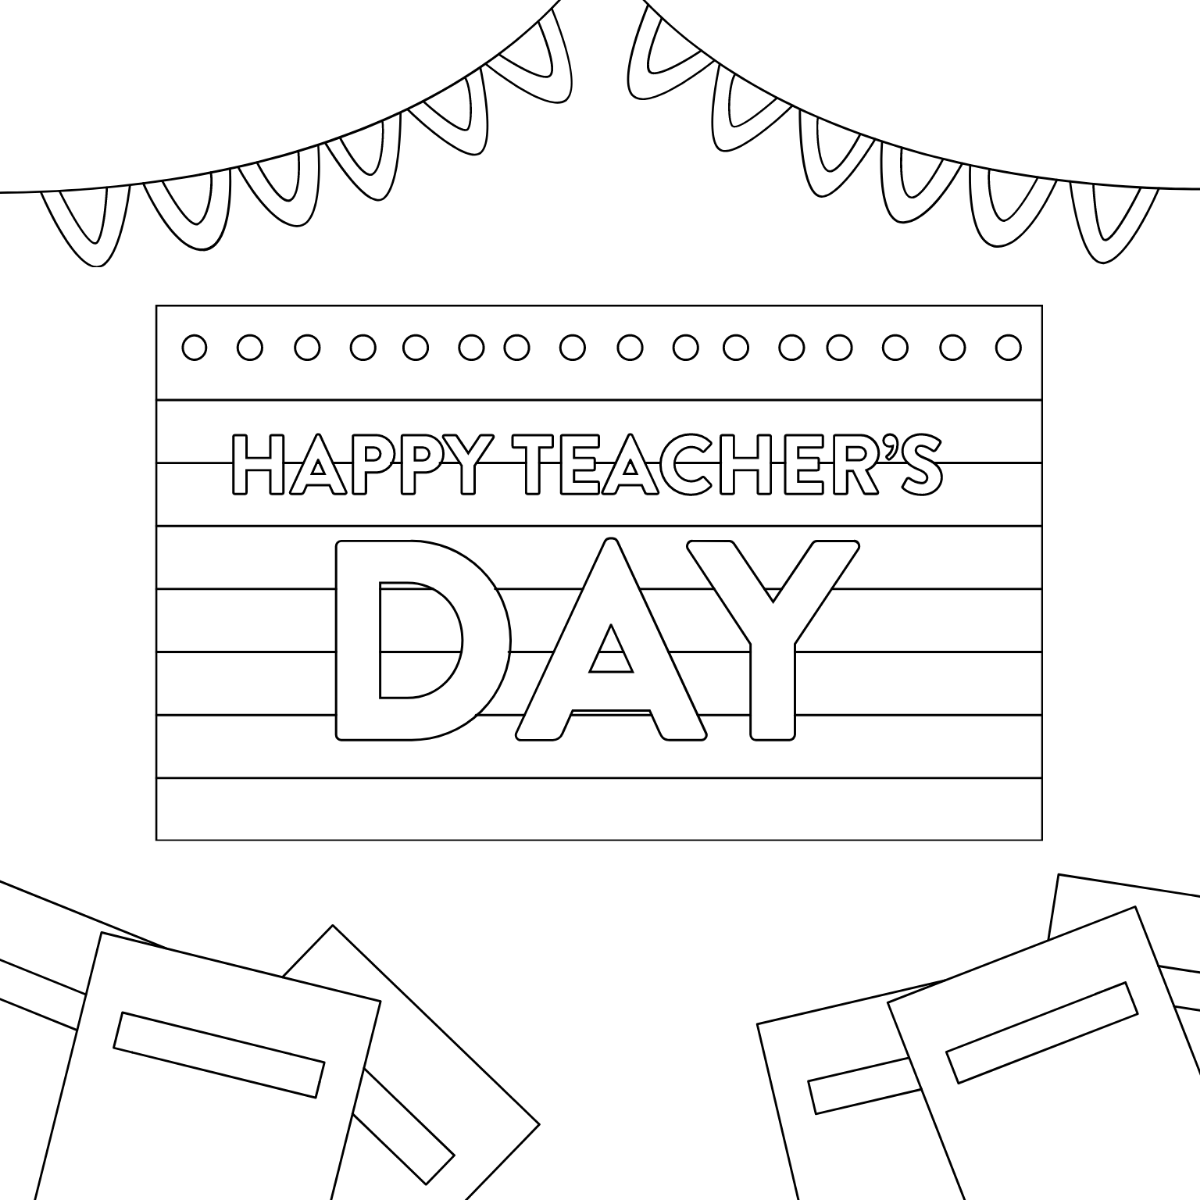 Teachers Day Design Drawing Template